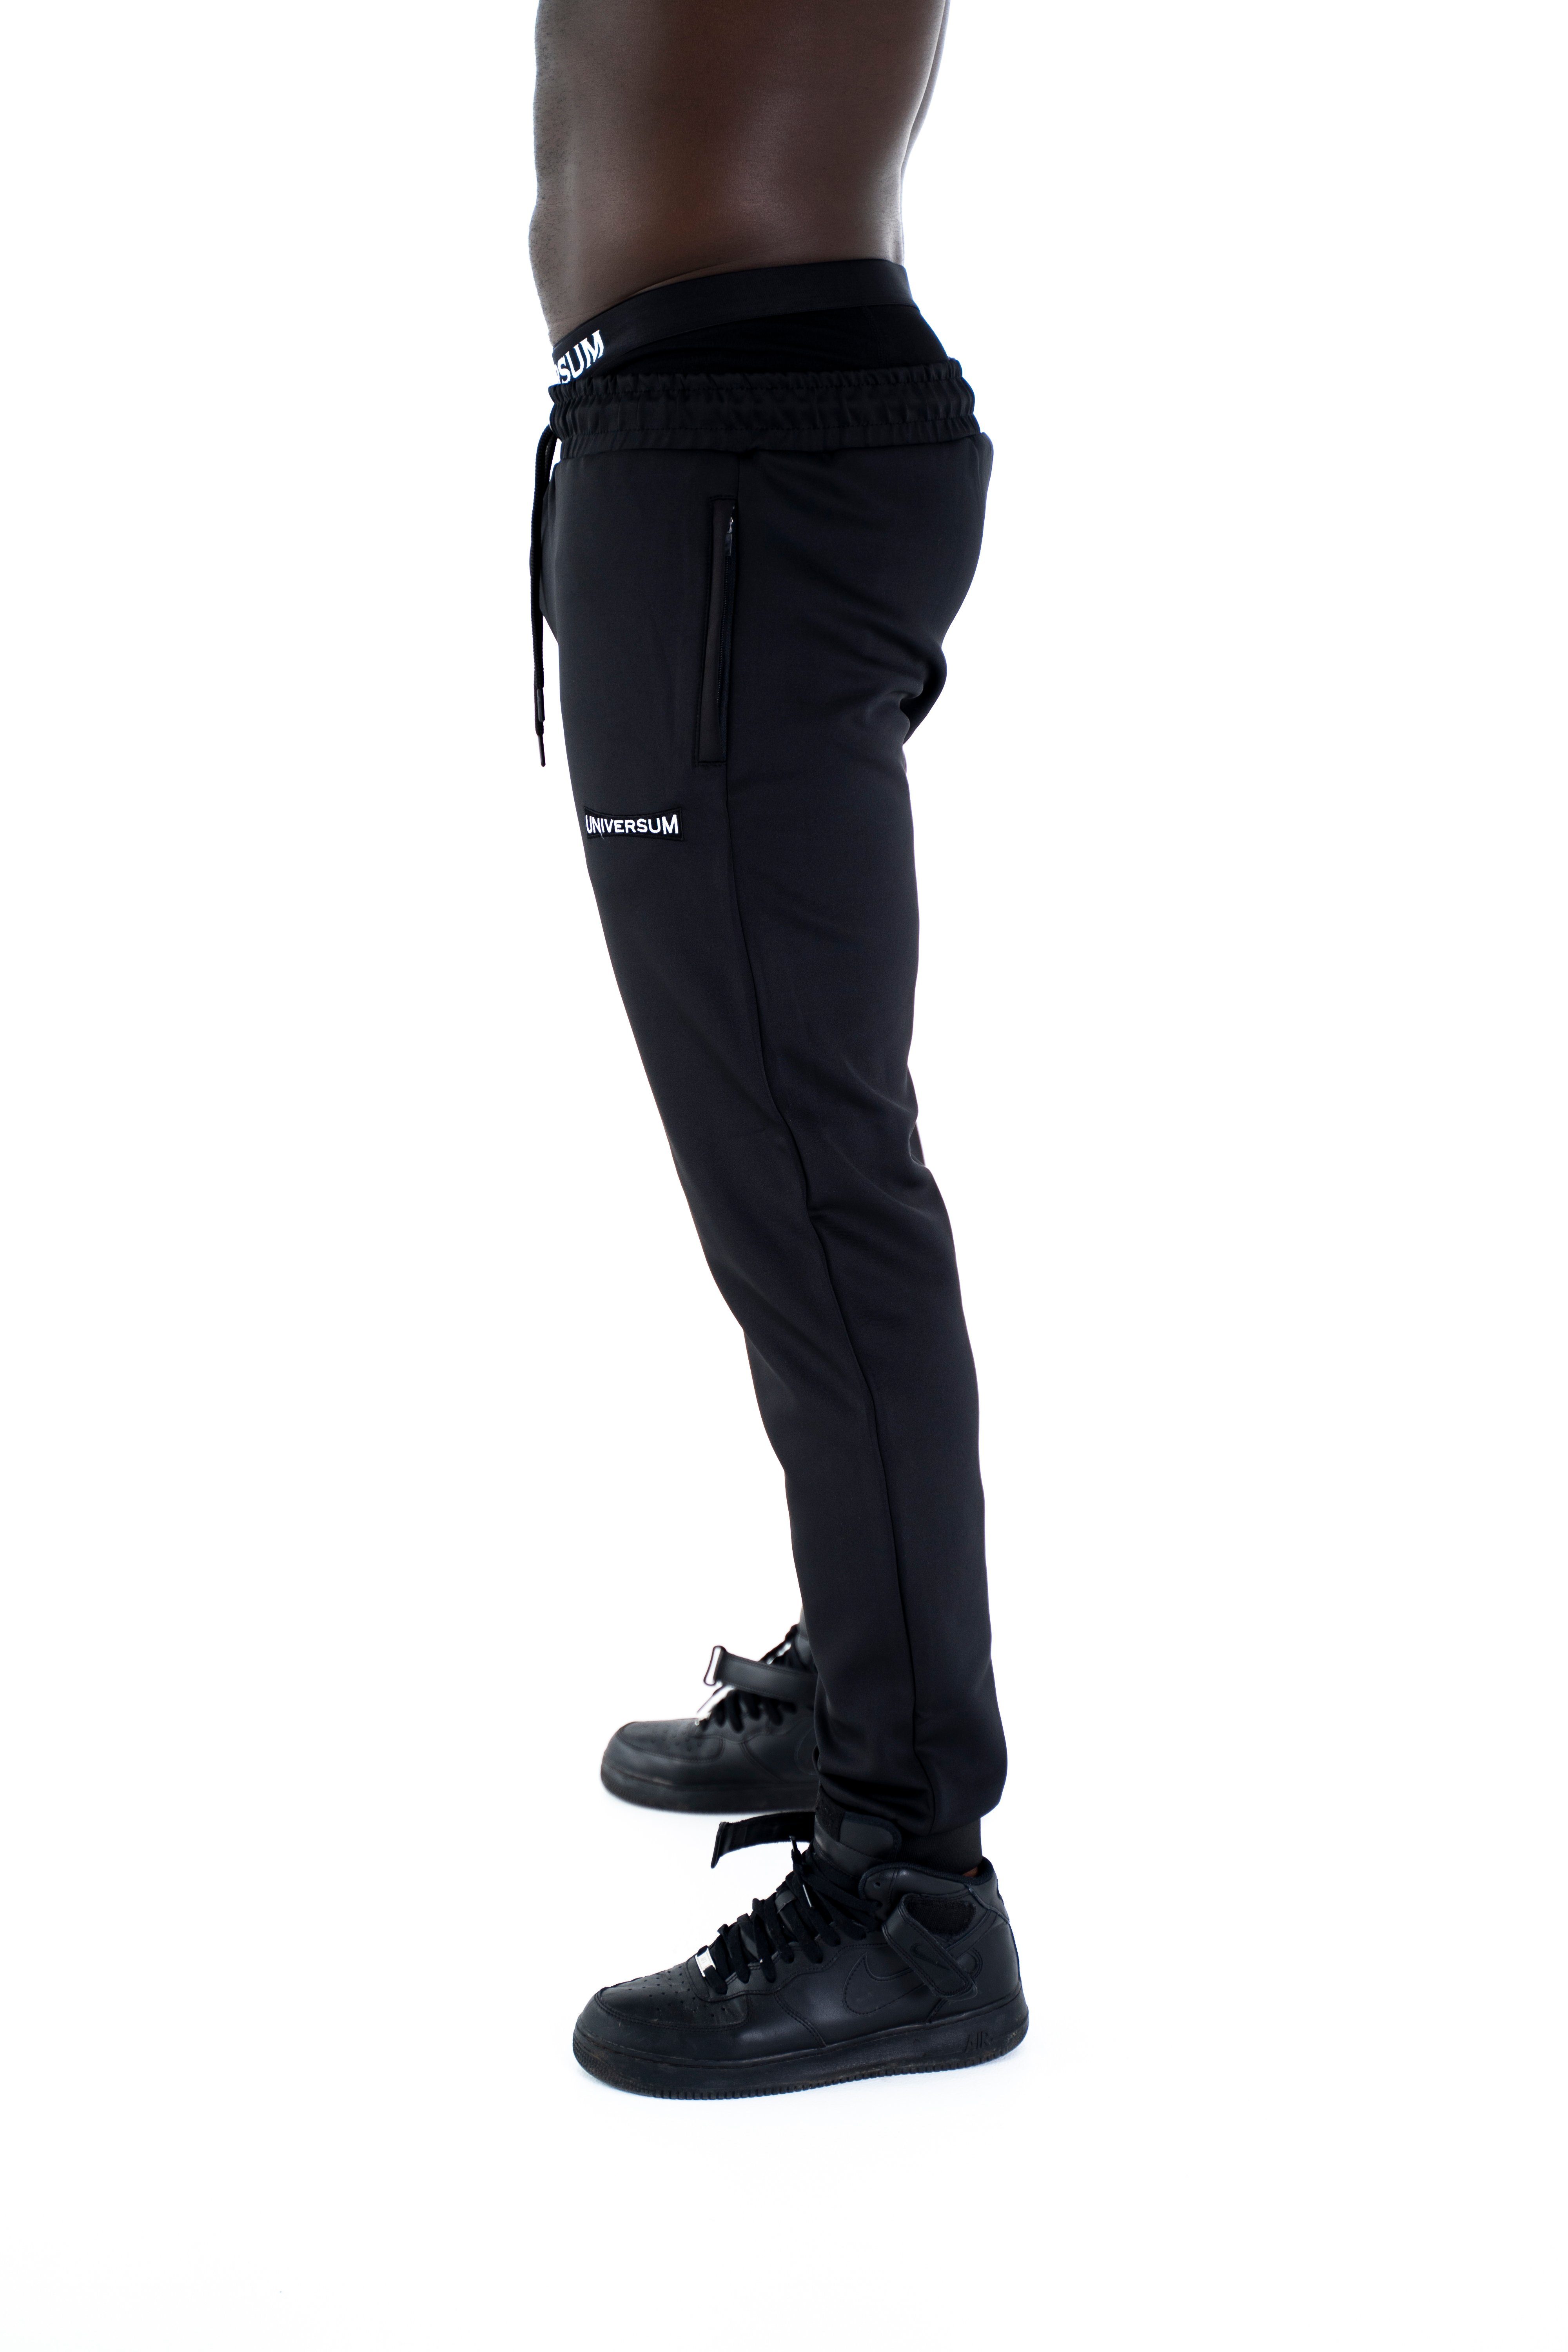 Modern Universum Jogginghose schwarz Freizeit Fitness Jogginghose Sportwear Sport, und Pants Fit für